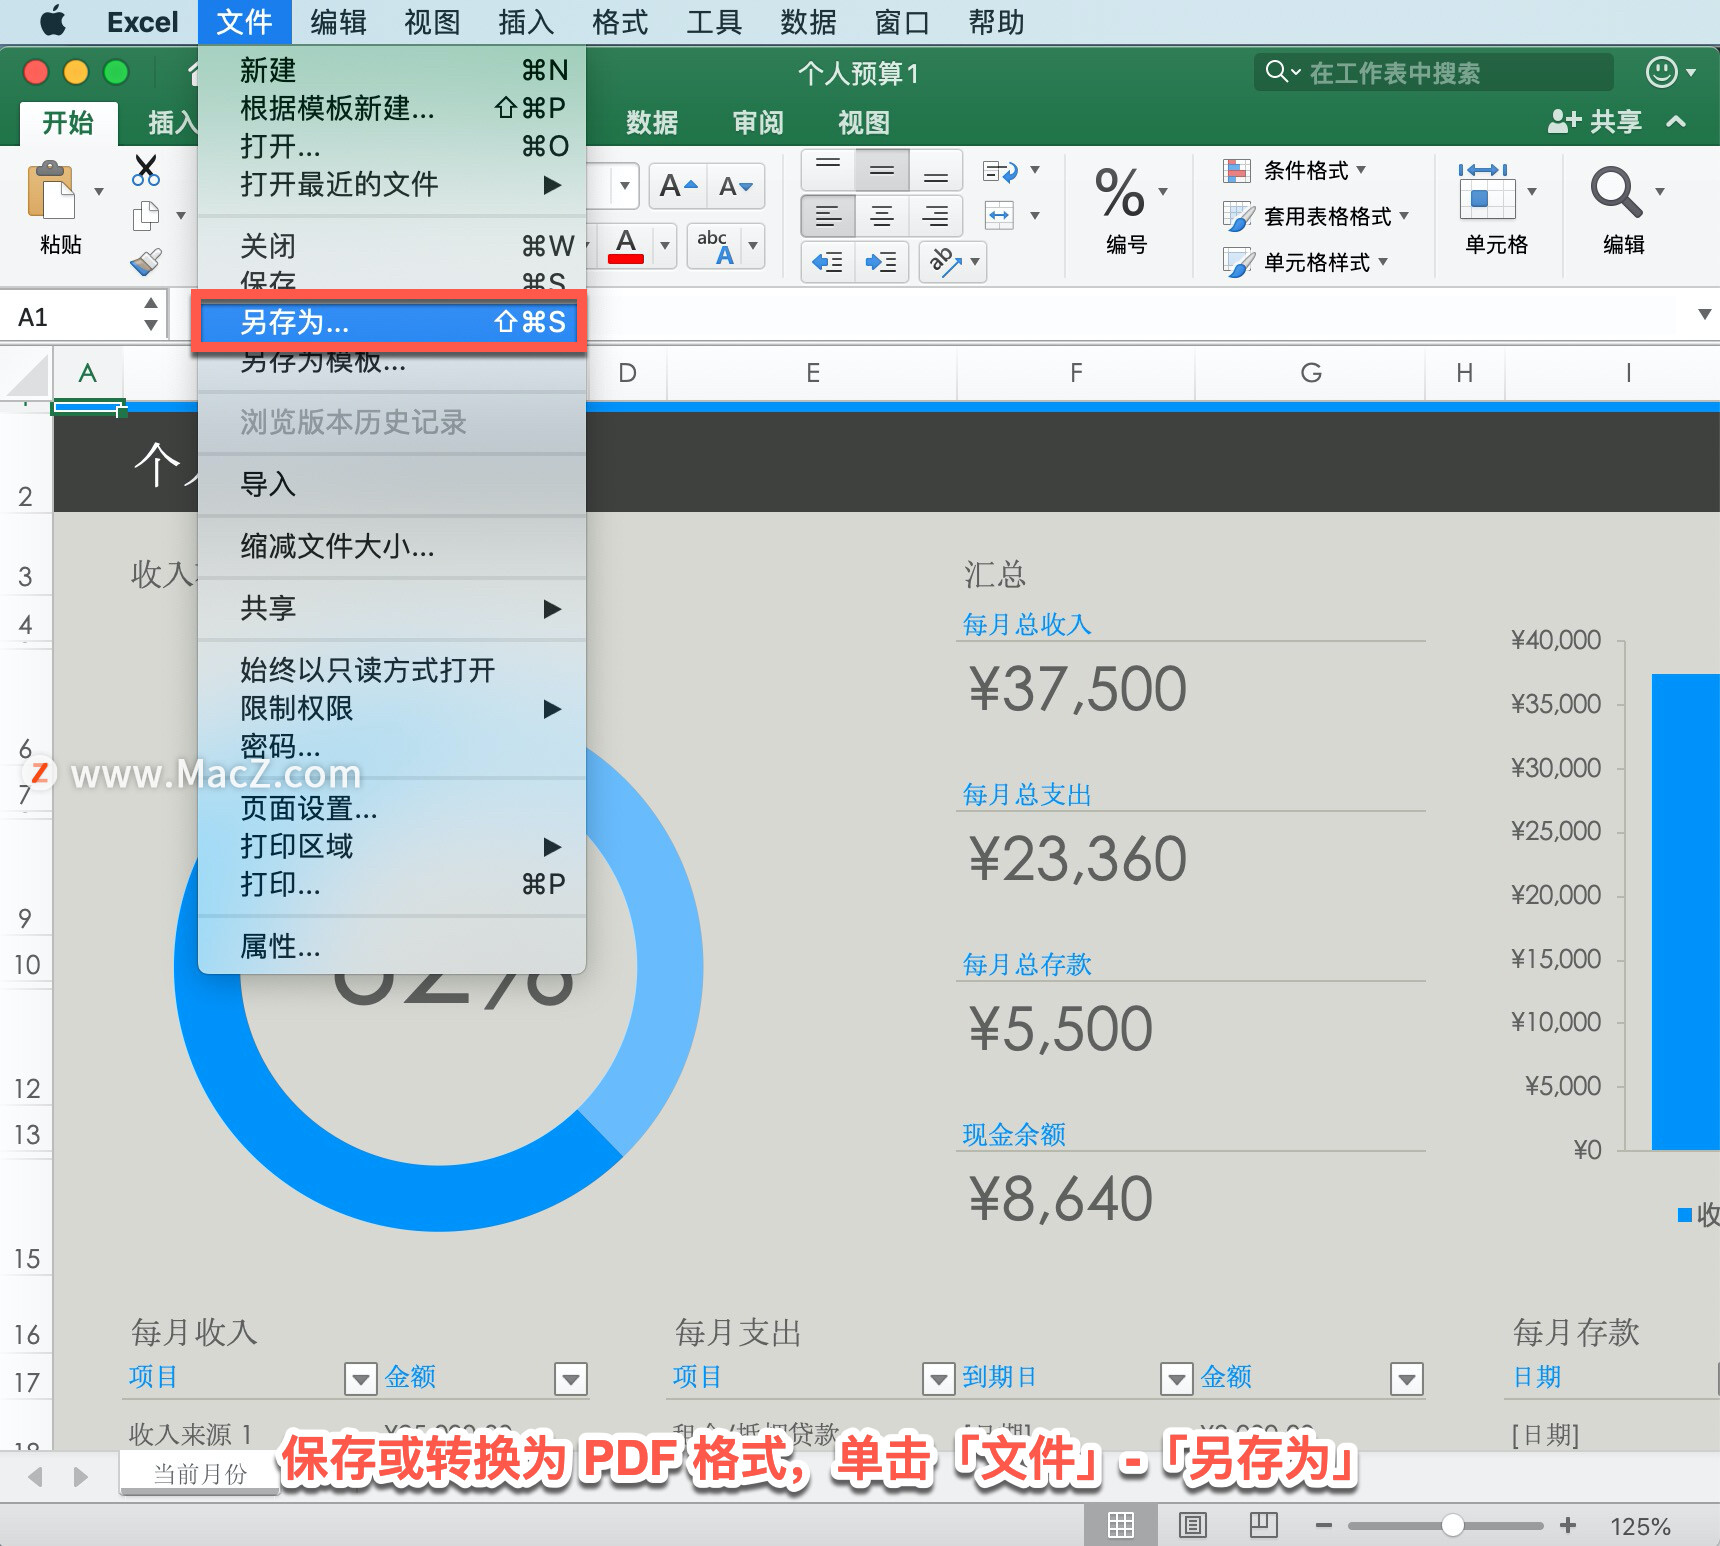 Microsoft Excel 教程「50」，如何在 Excel 中保存文件或转换为 PDF 格式？